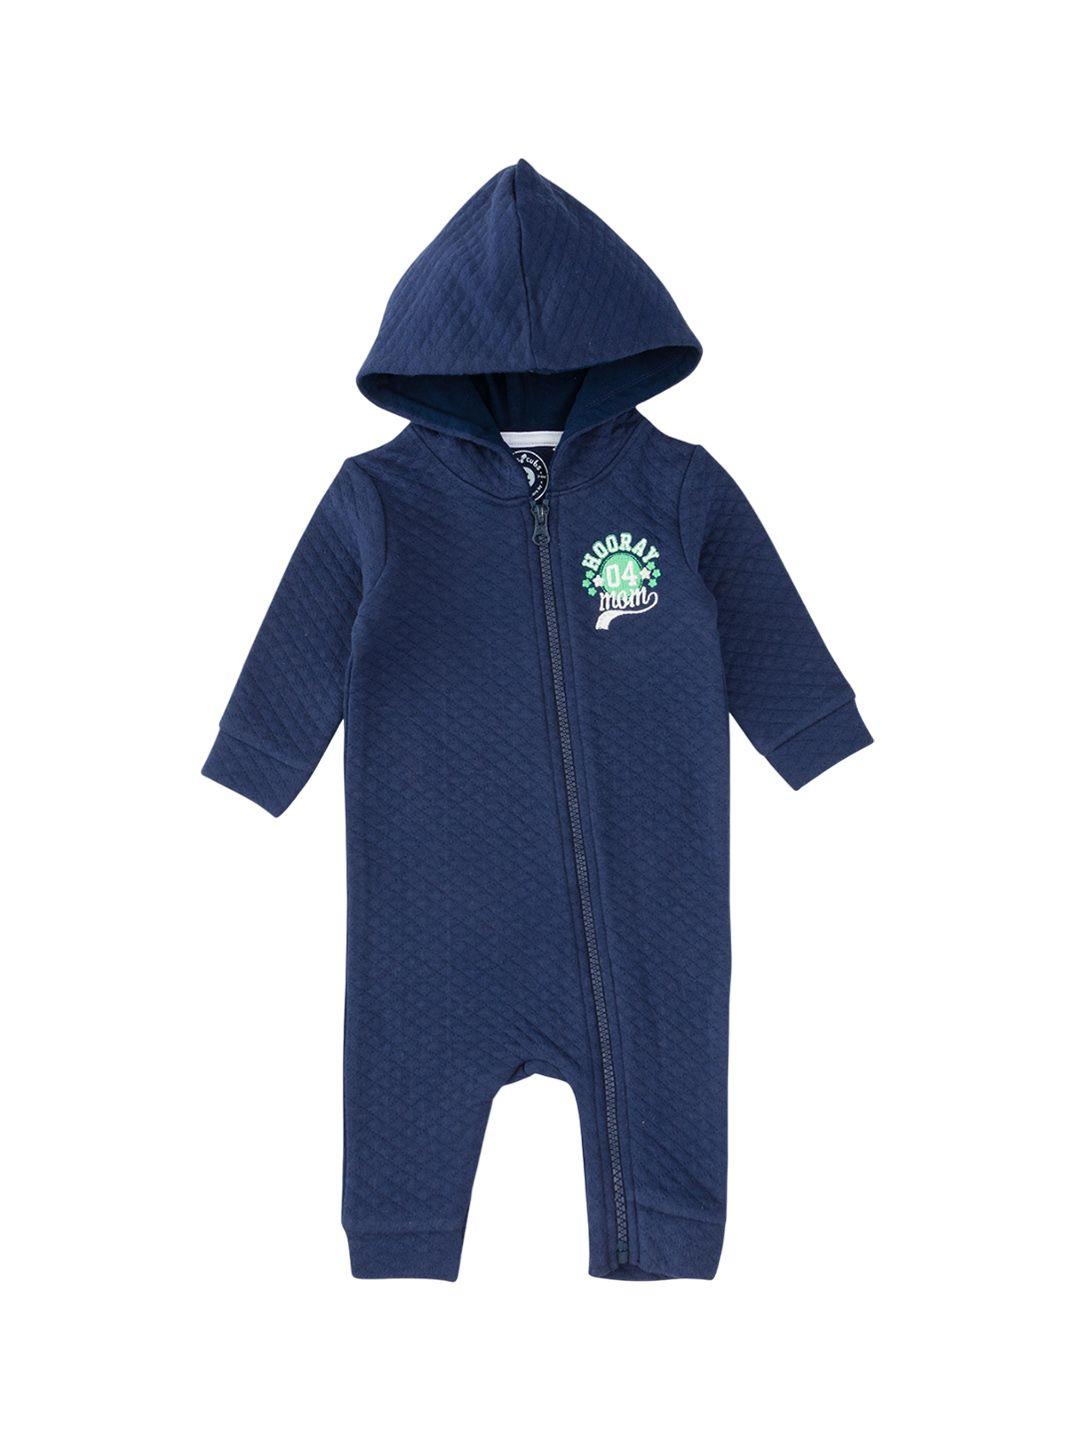 JusCubs Infant Boys Self-Design Cotton Rompers